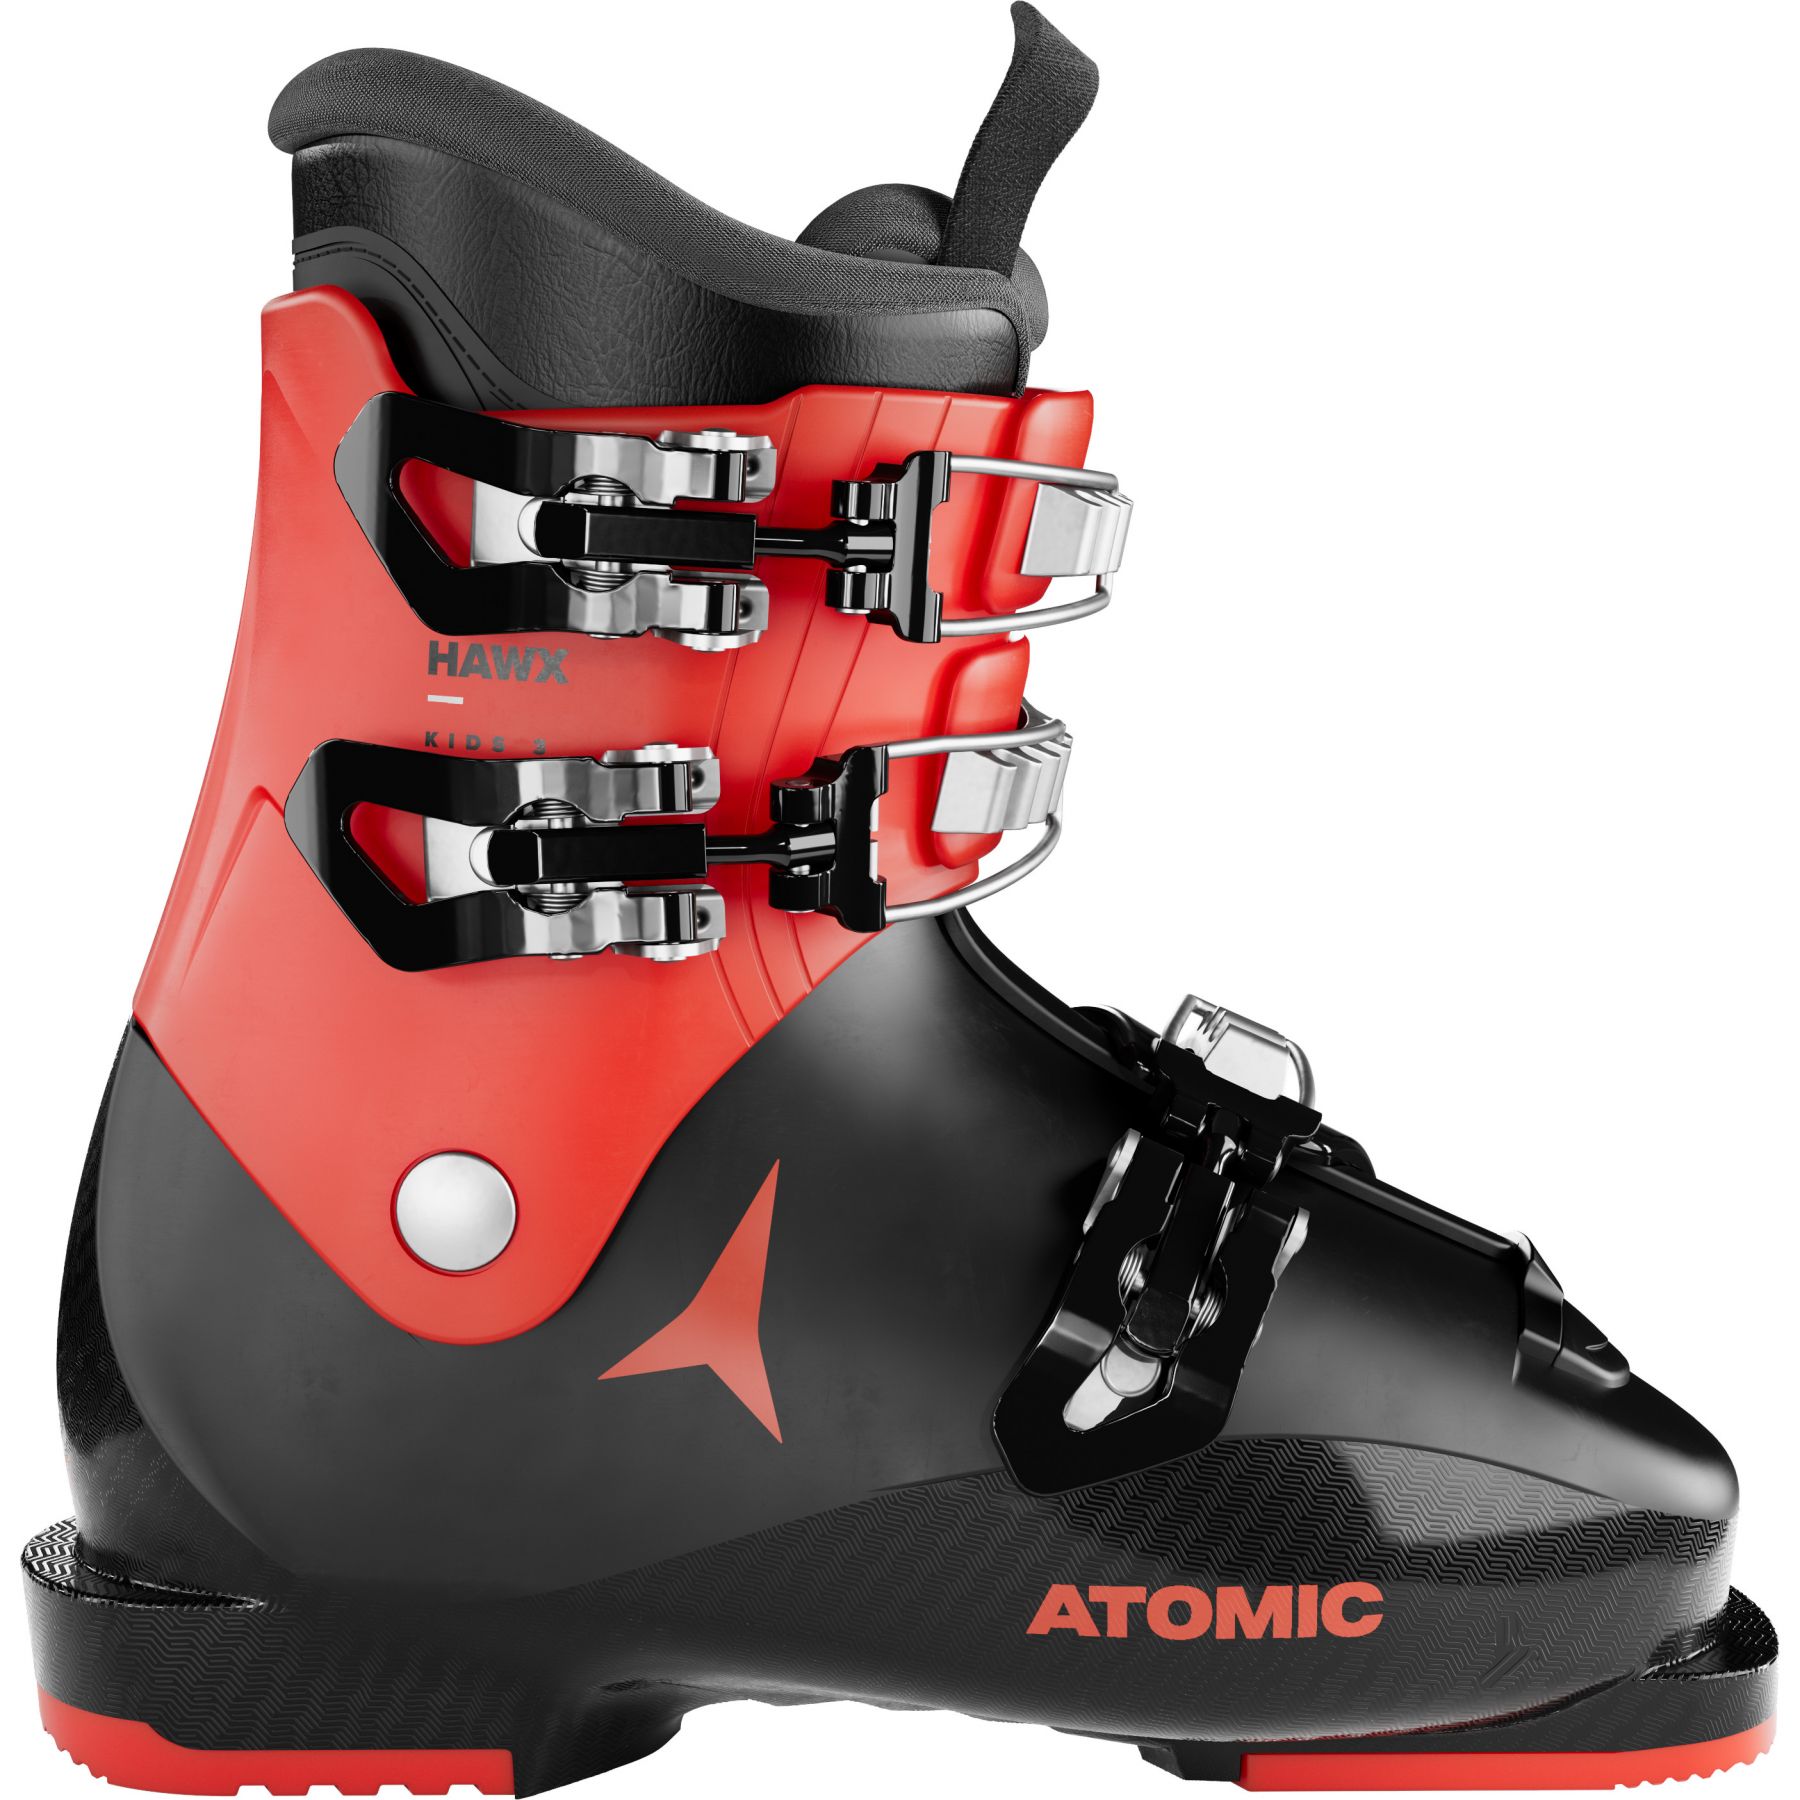 Atomic Hawx Kids 3, skistøvler, junior, sort/rød thumbnail